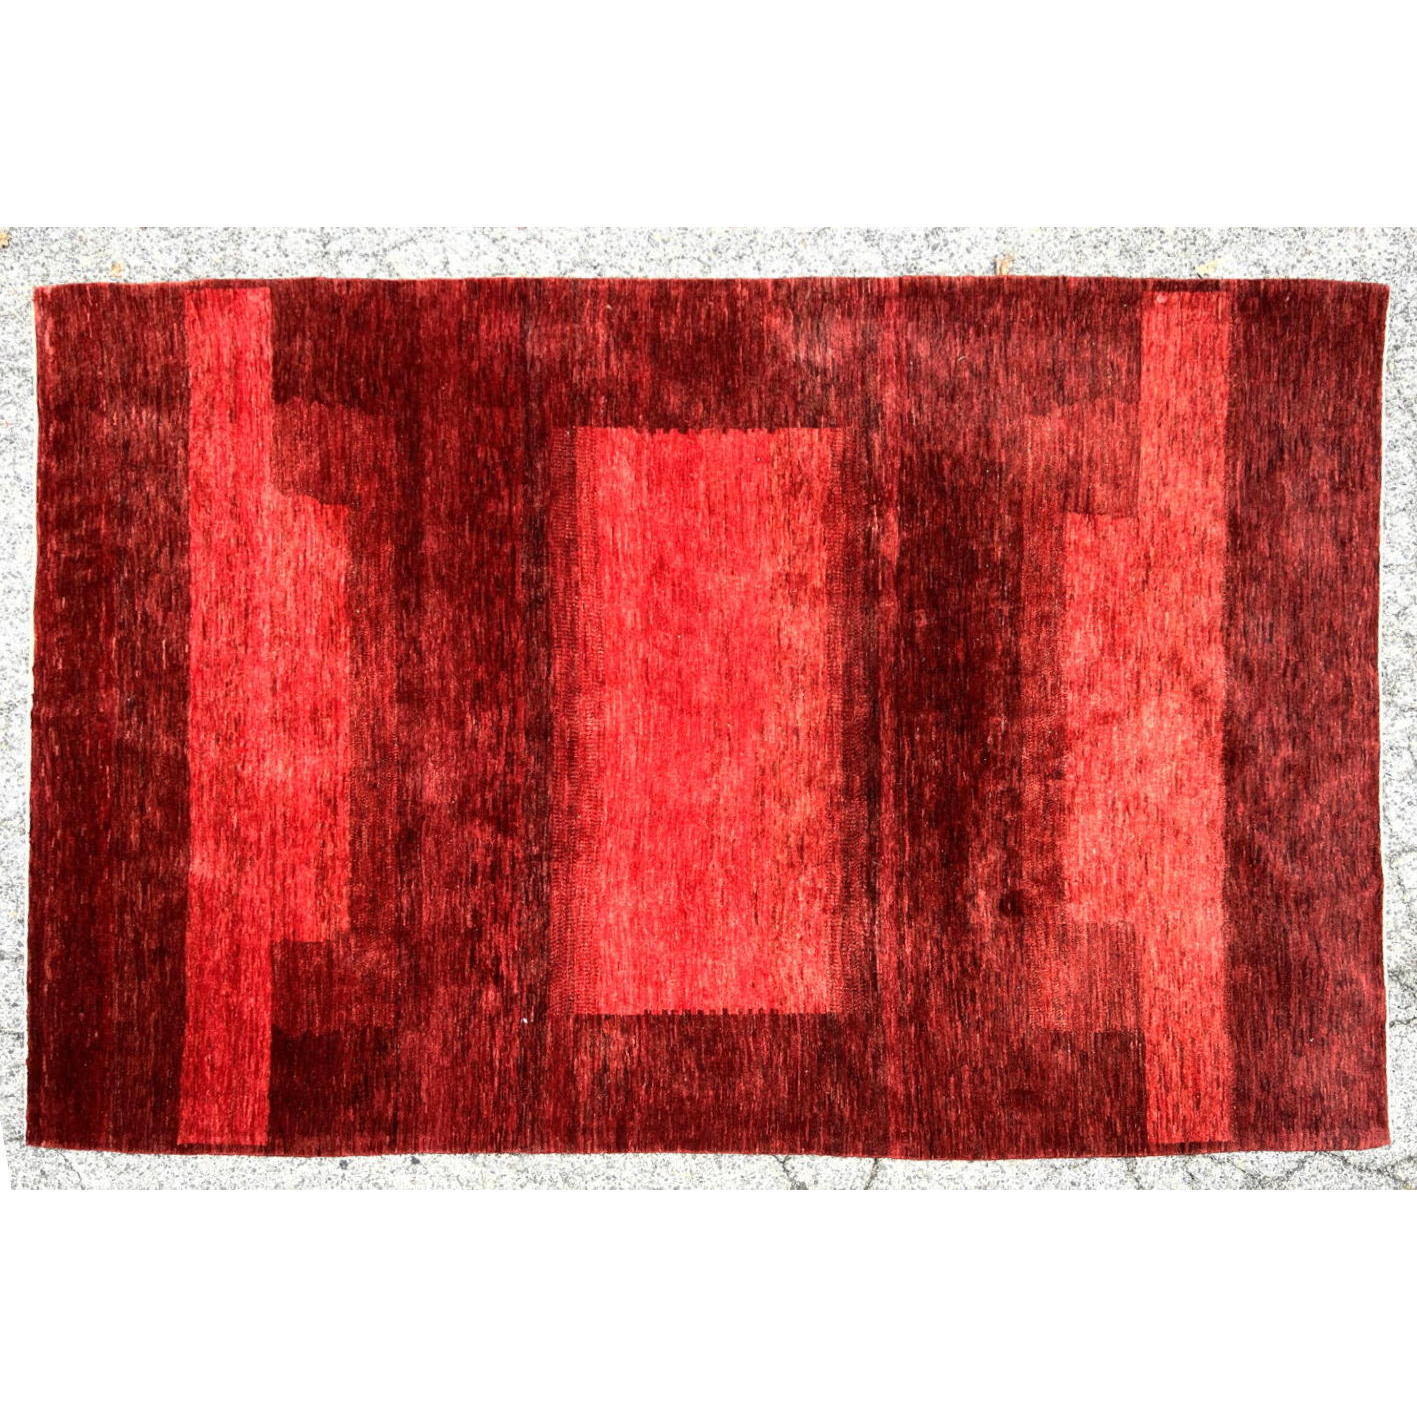 Modern Op ART Shades of red. Red